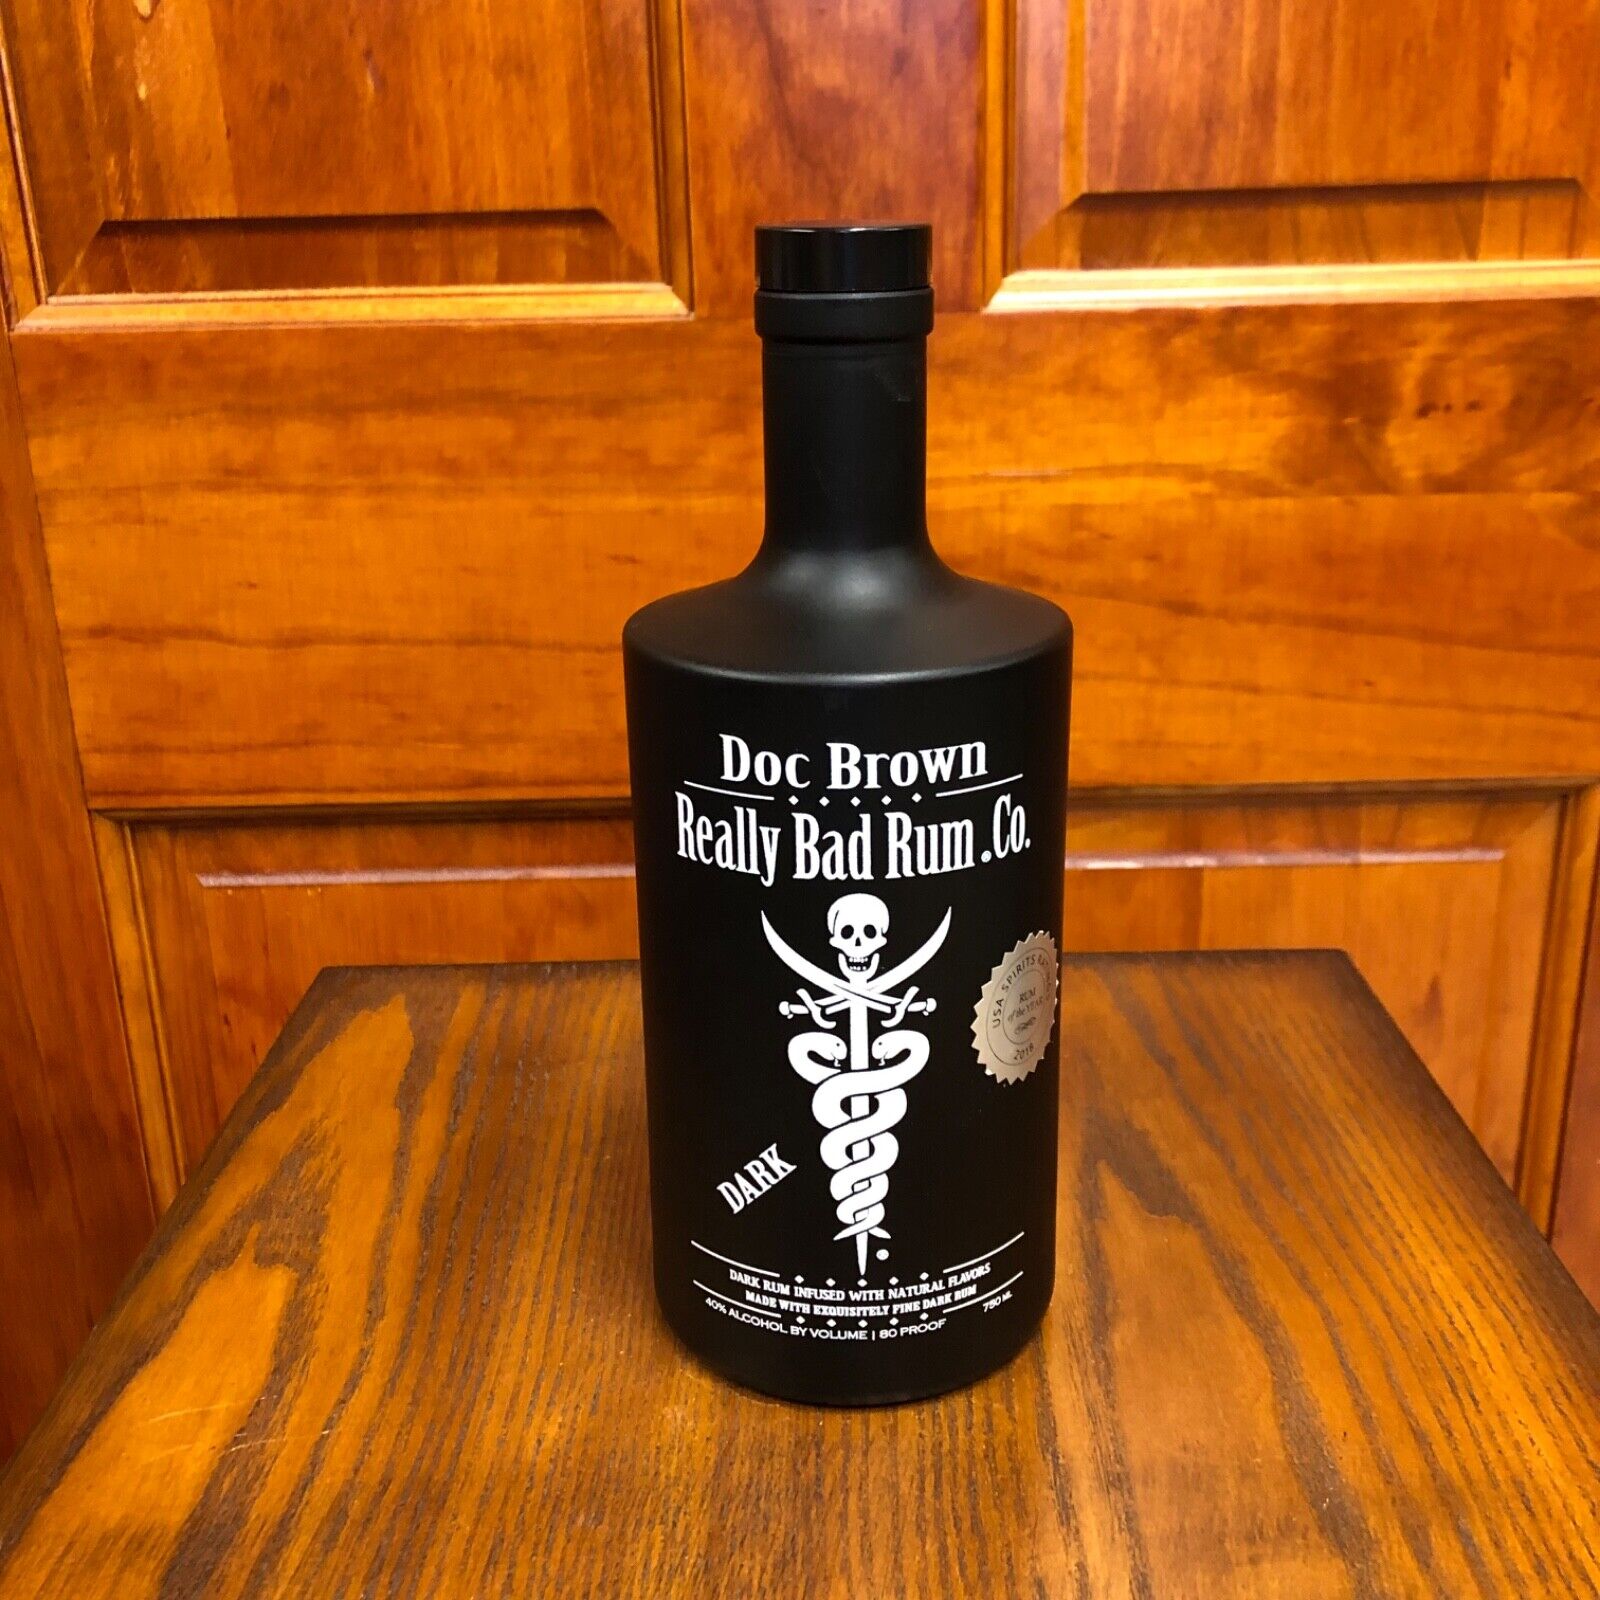 Doc Brown Really Bad Rum Co. - Dark Rum Empty 750ML Bottle, Made with dark rum